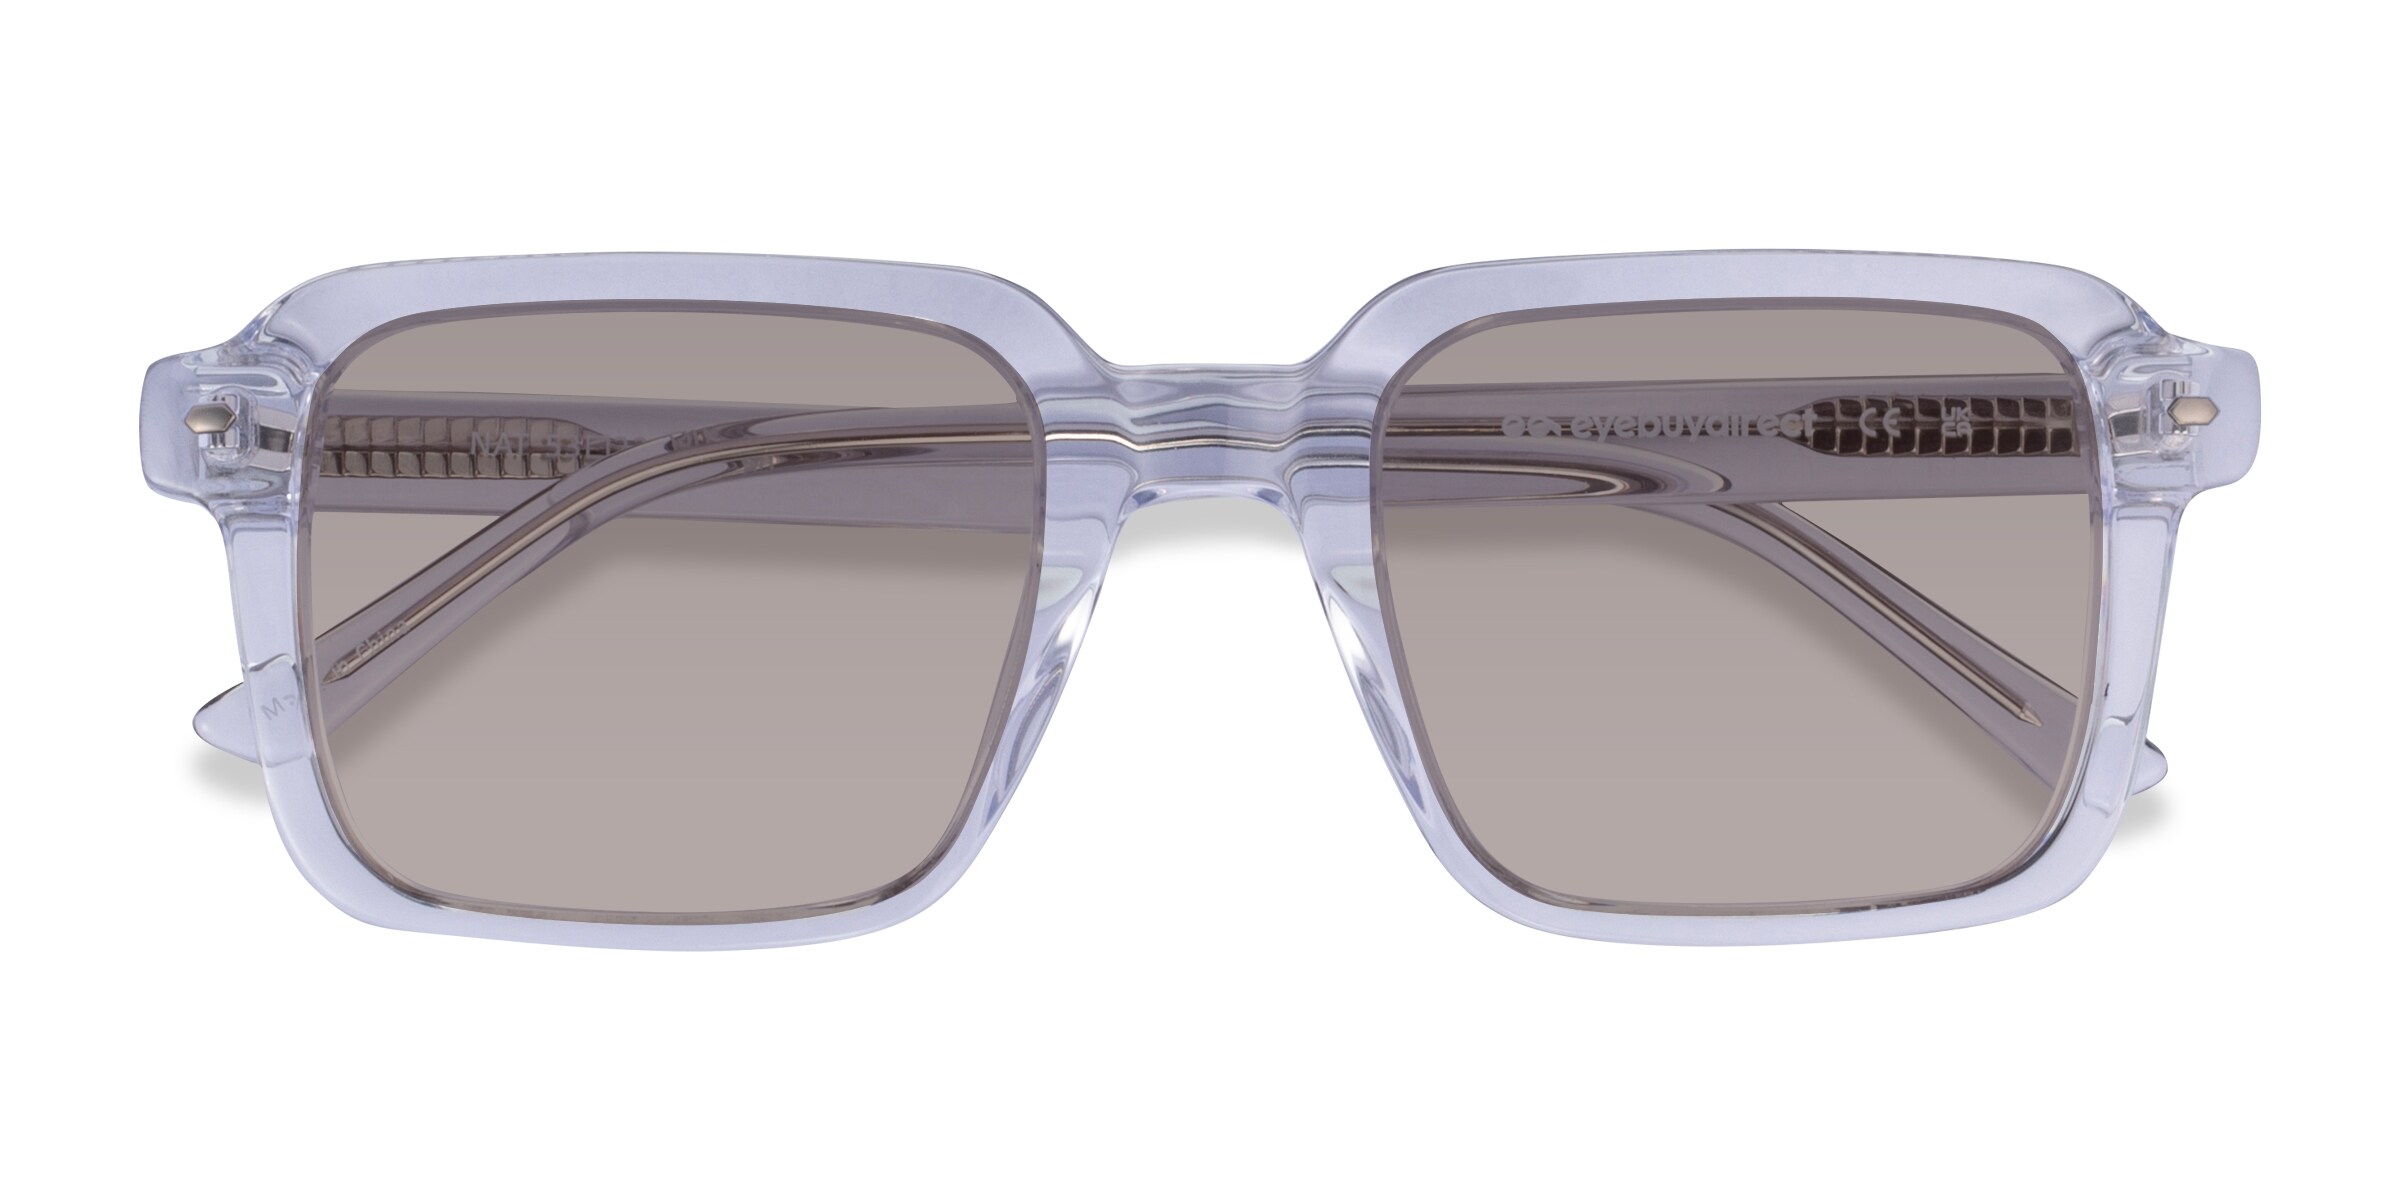 Buy ParisSparrow Unisex Adult Aviator sunglasses Transparent Frame Clear  Lens Medium Pack of 1 at Amazon.in